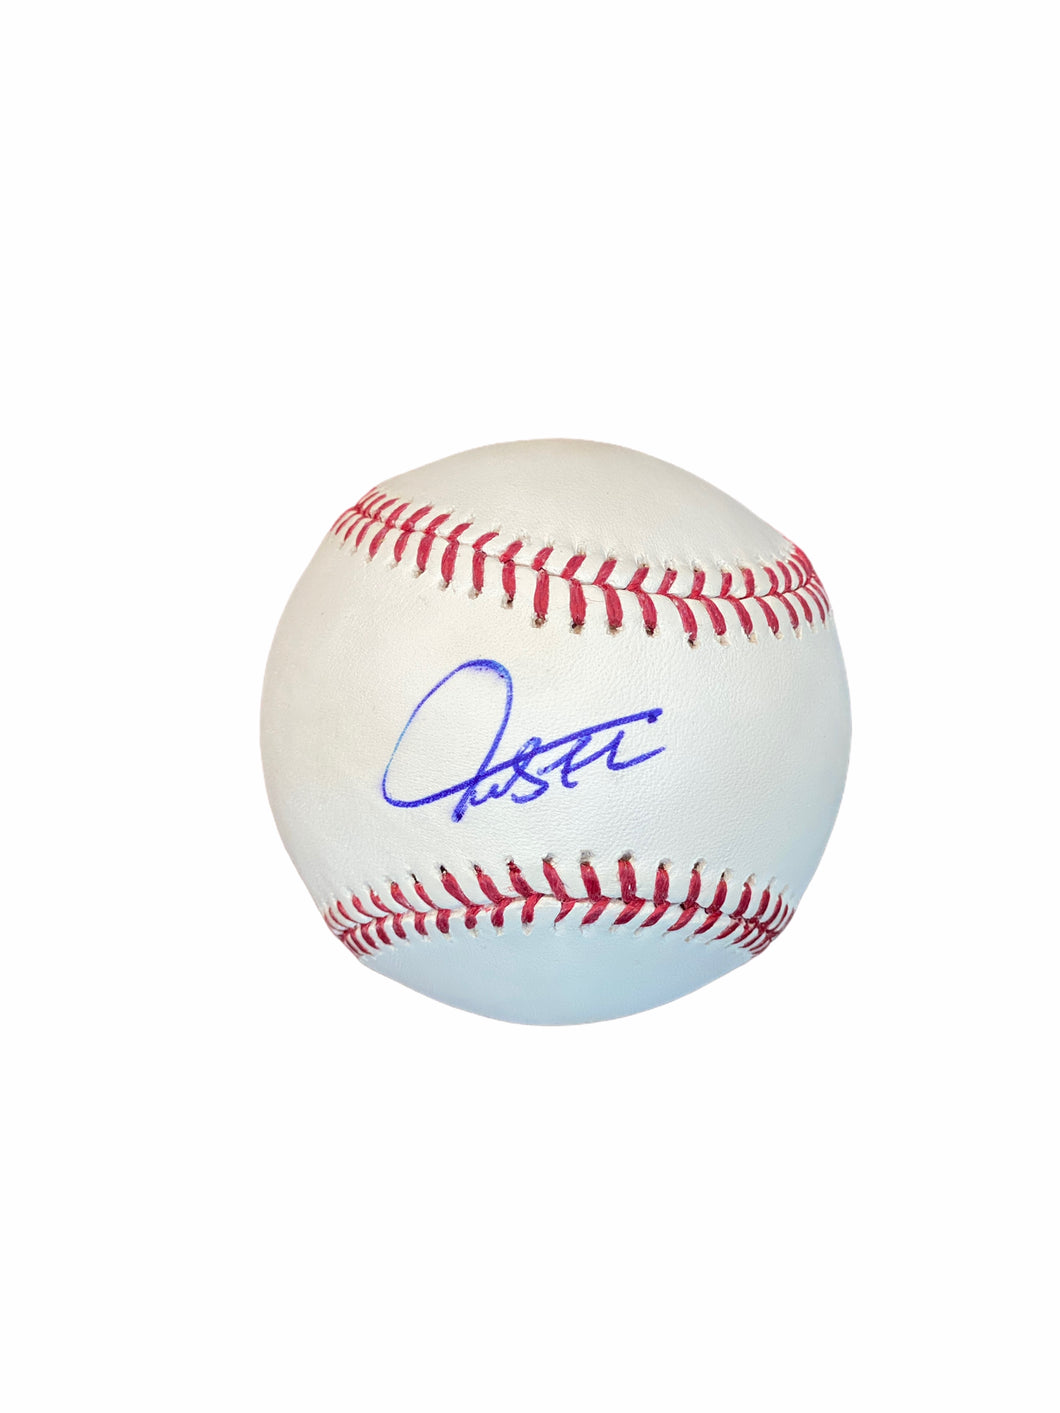 Pelota Baseball / Yankees / Giancarlo Staton